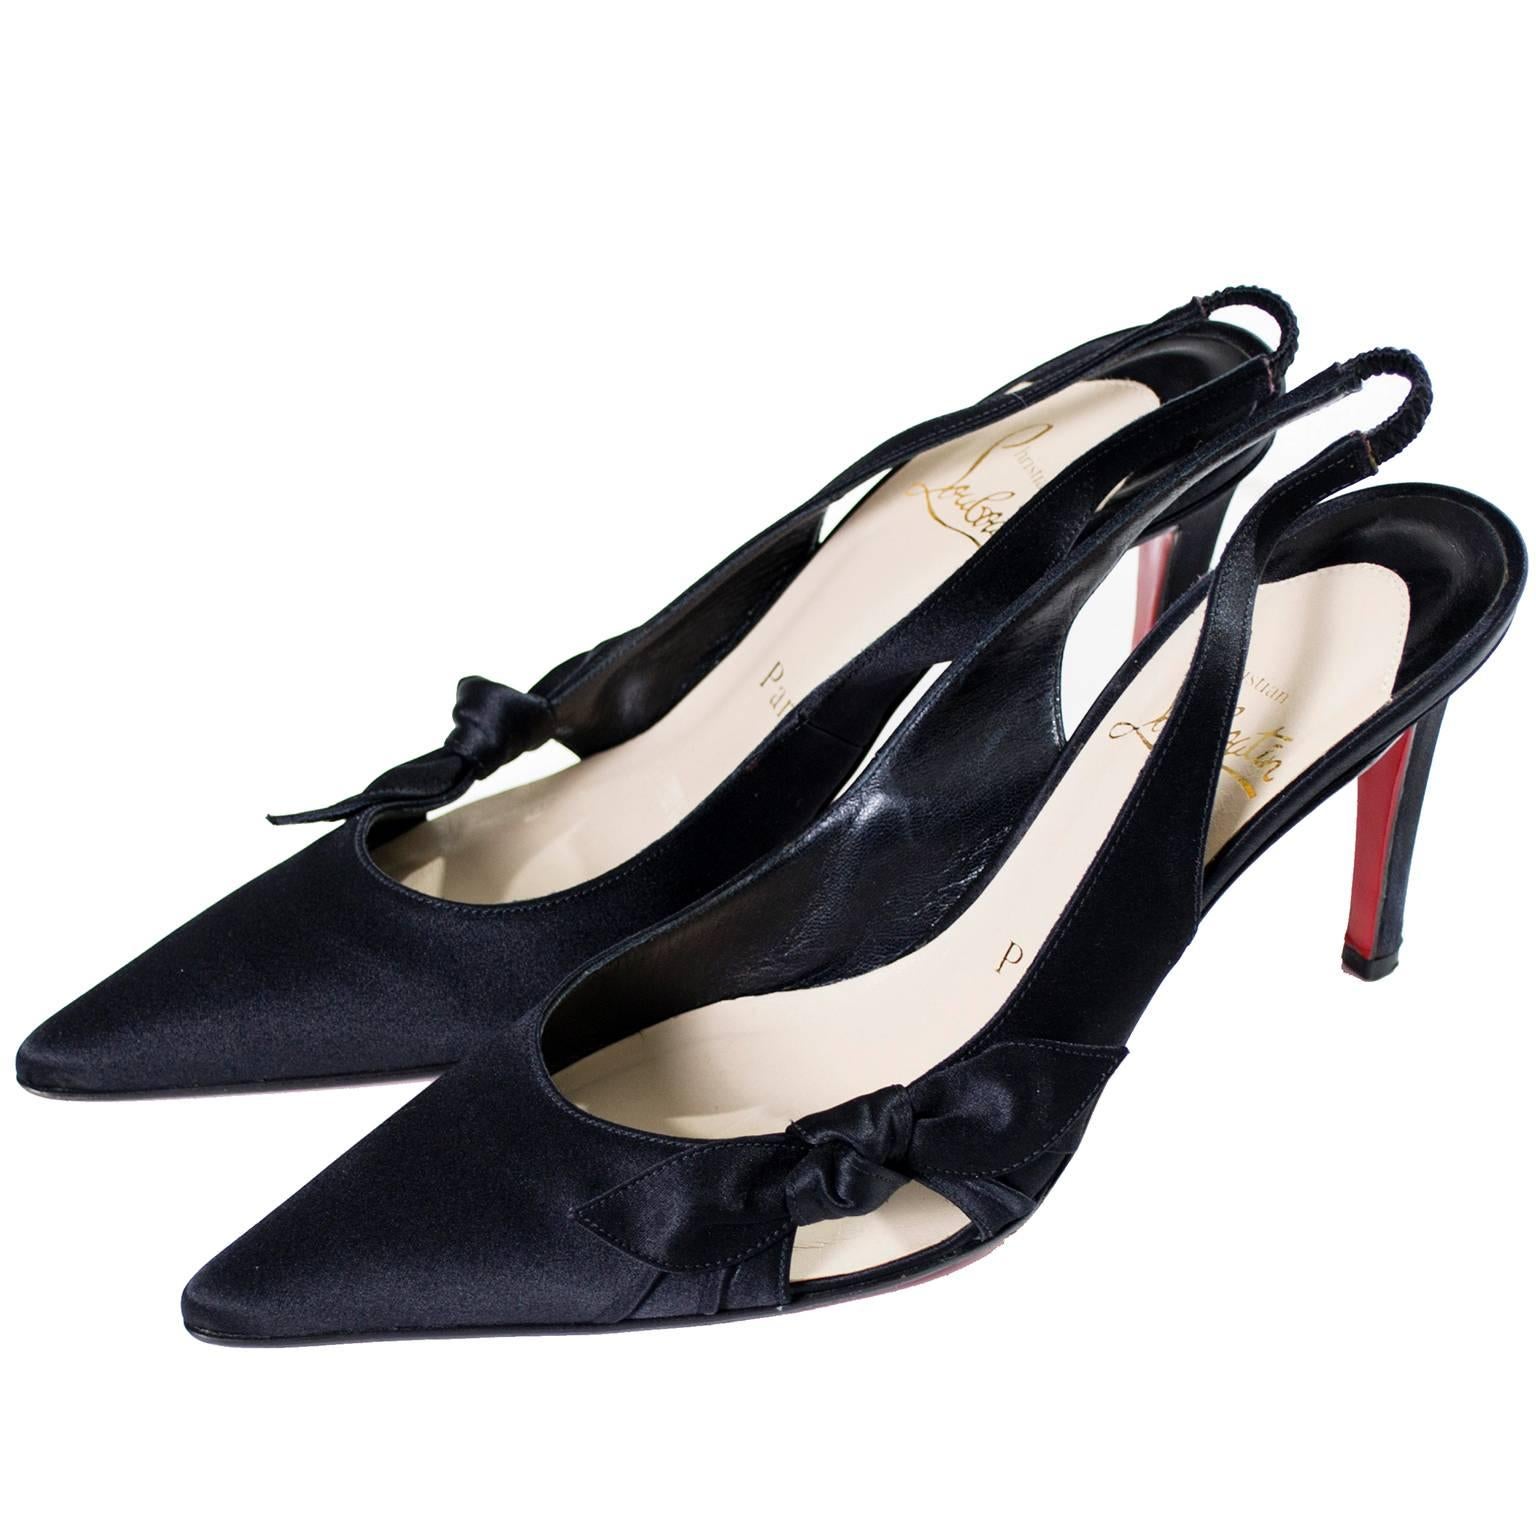 Christian Louboutin Black Satin Shoes Slingbacks Bows Size 35.5 5.5